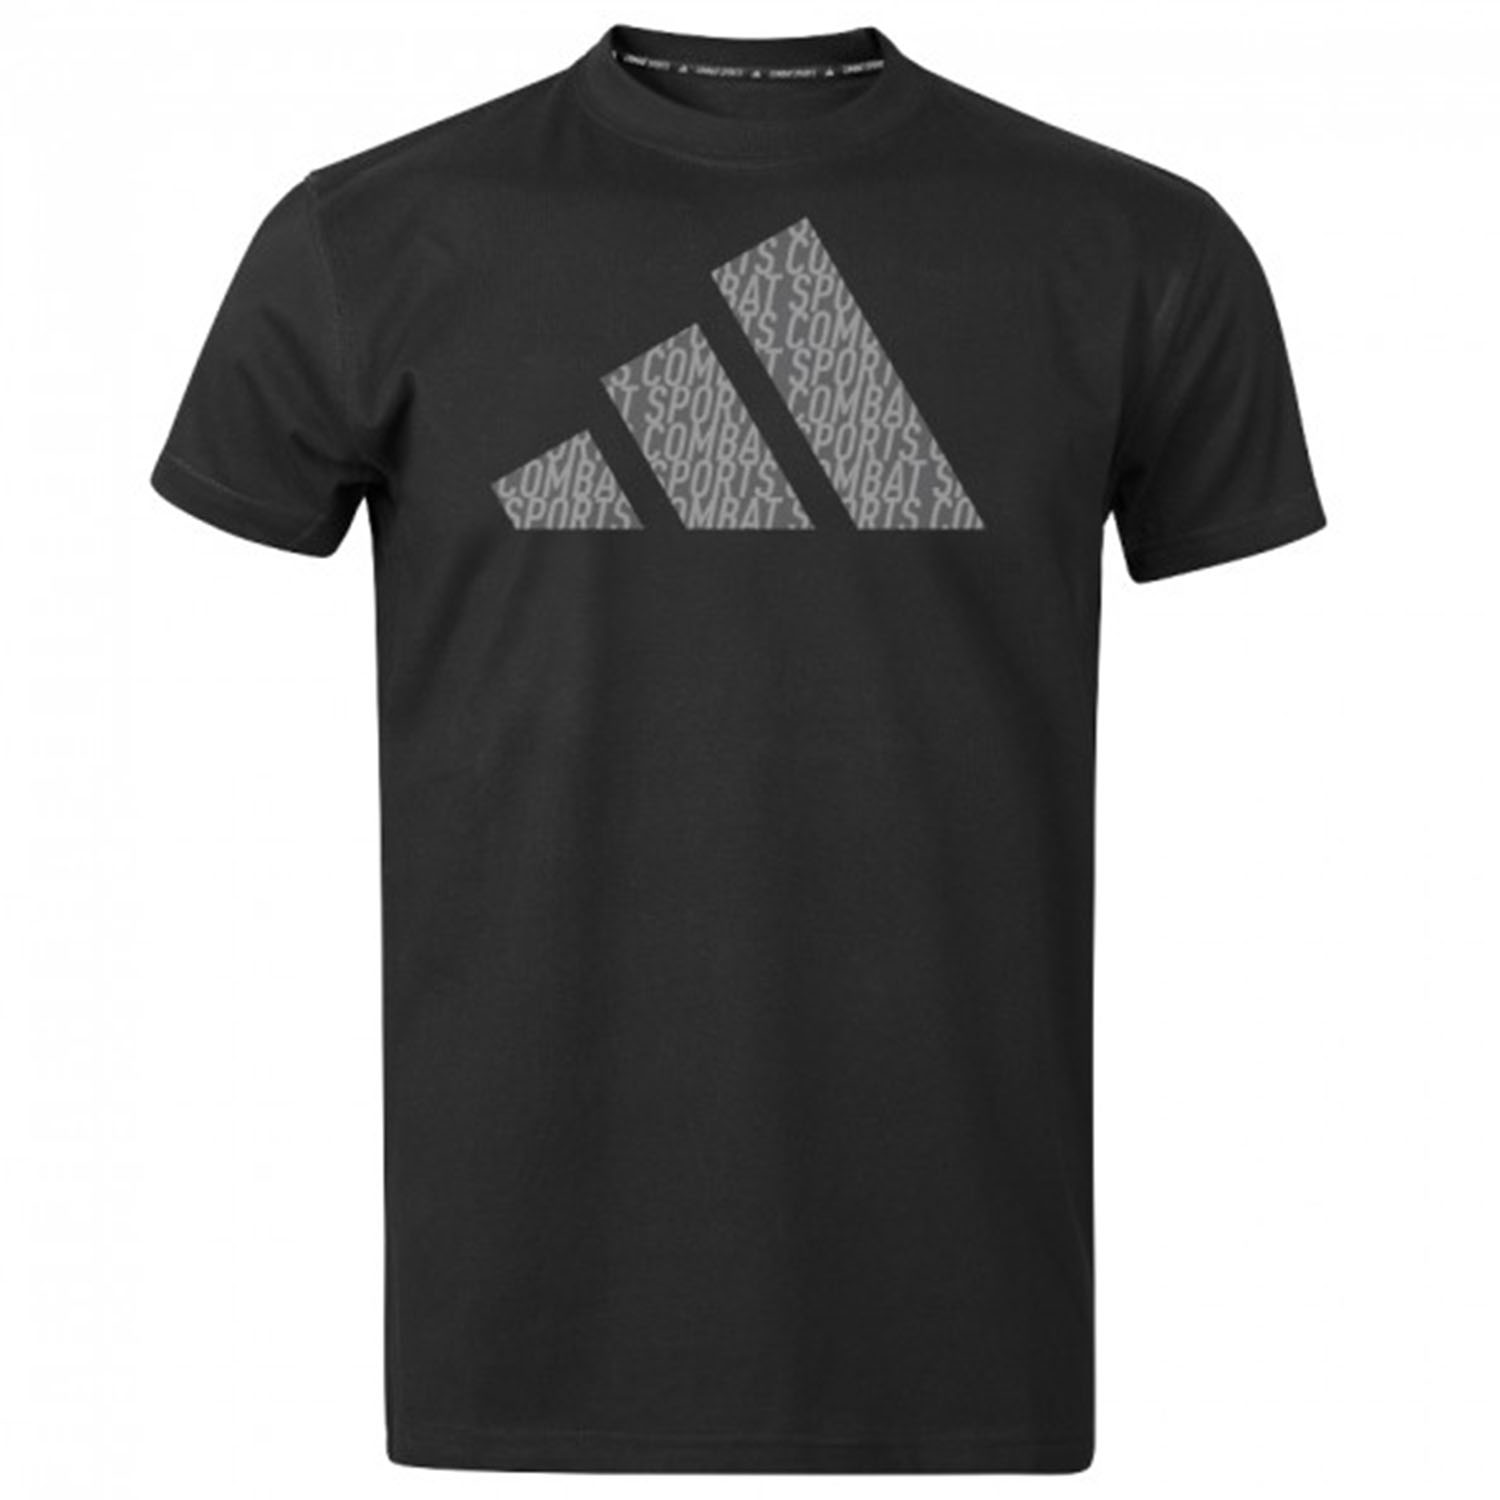 adidas T-Shirt, Perfo Script Graphic Combat Sports, black, M